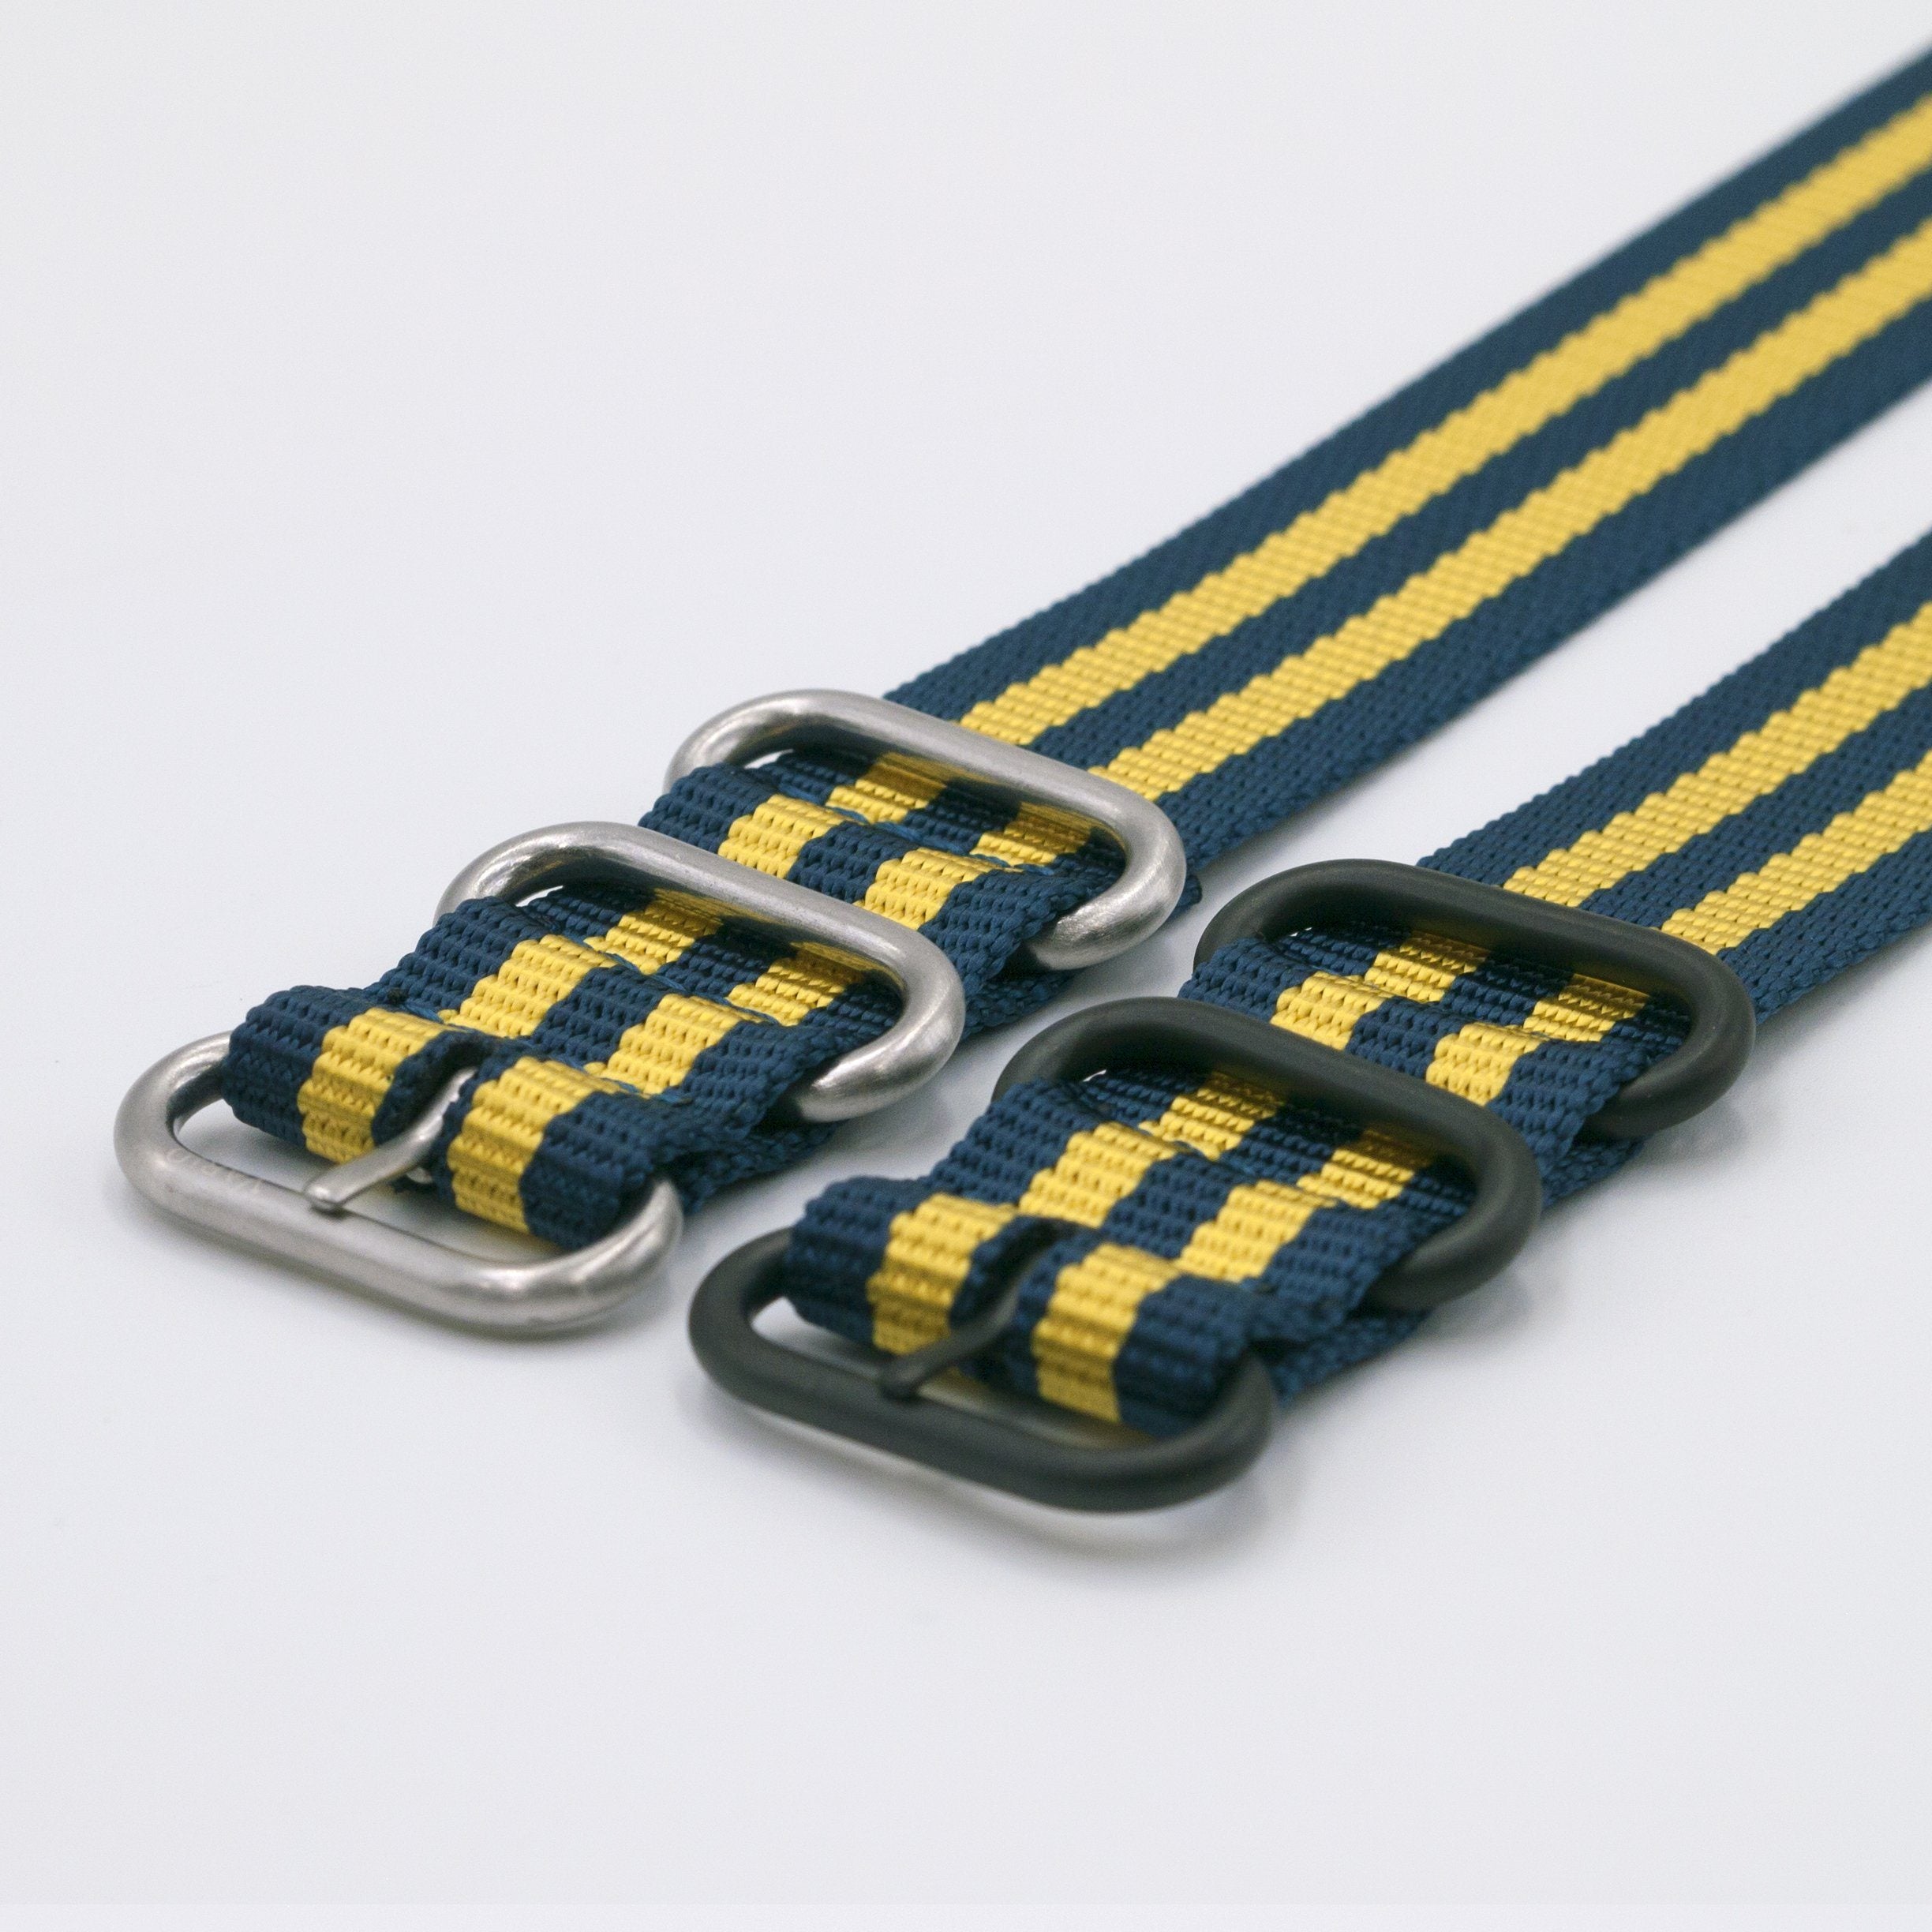 vario ballistic nylon blue yellow stripe maratac strap with casio g shock adapter silver black buckle